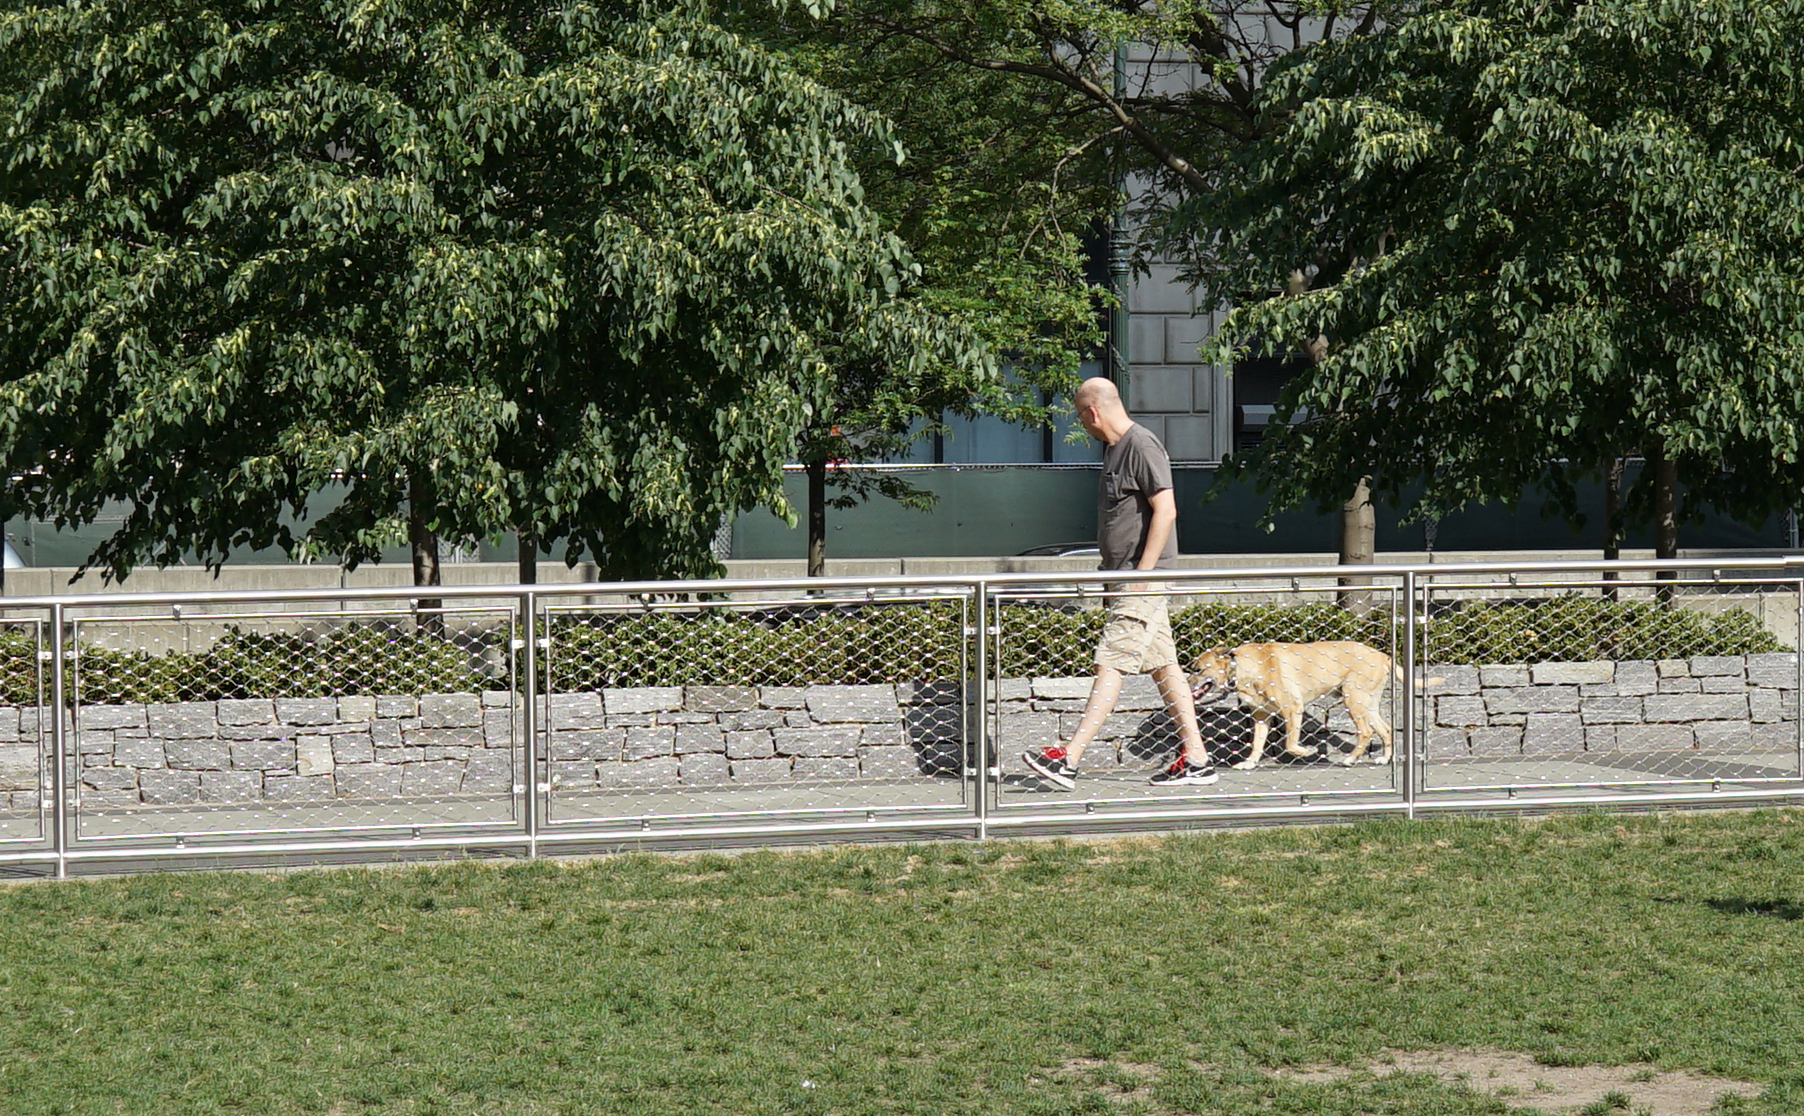 Dog on walkway by grass field